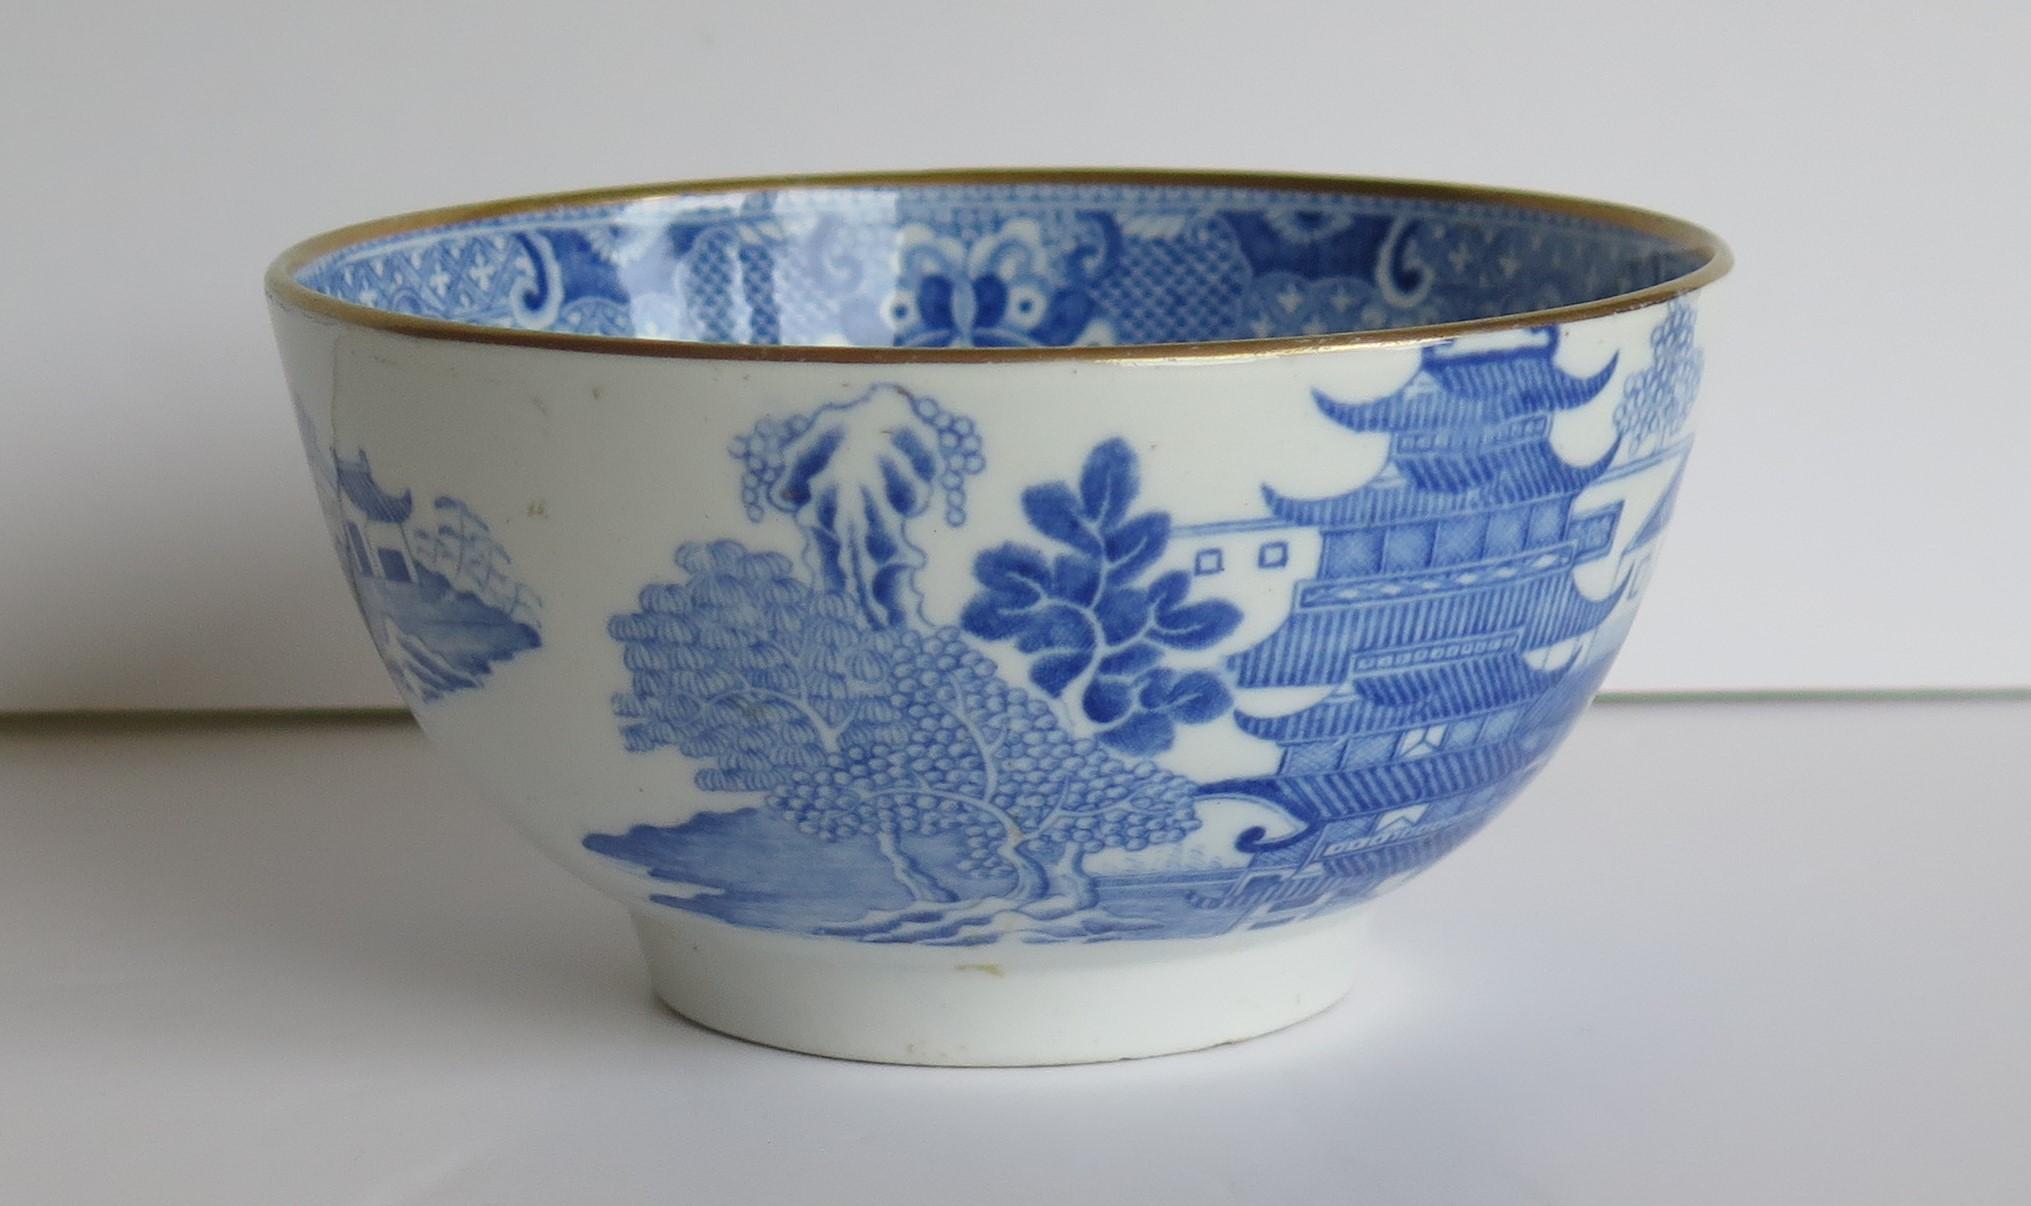 19th Century Miles Mason Porcelain Bowl Blue and White Broseley Pattern, English, circa 1805